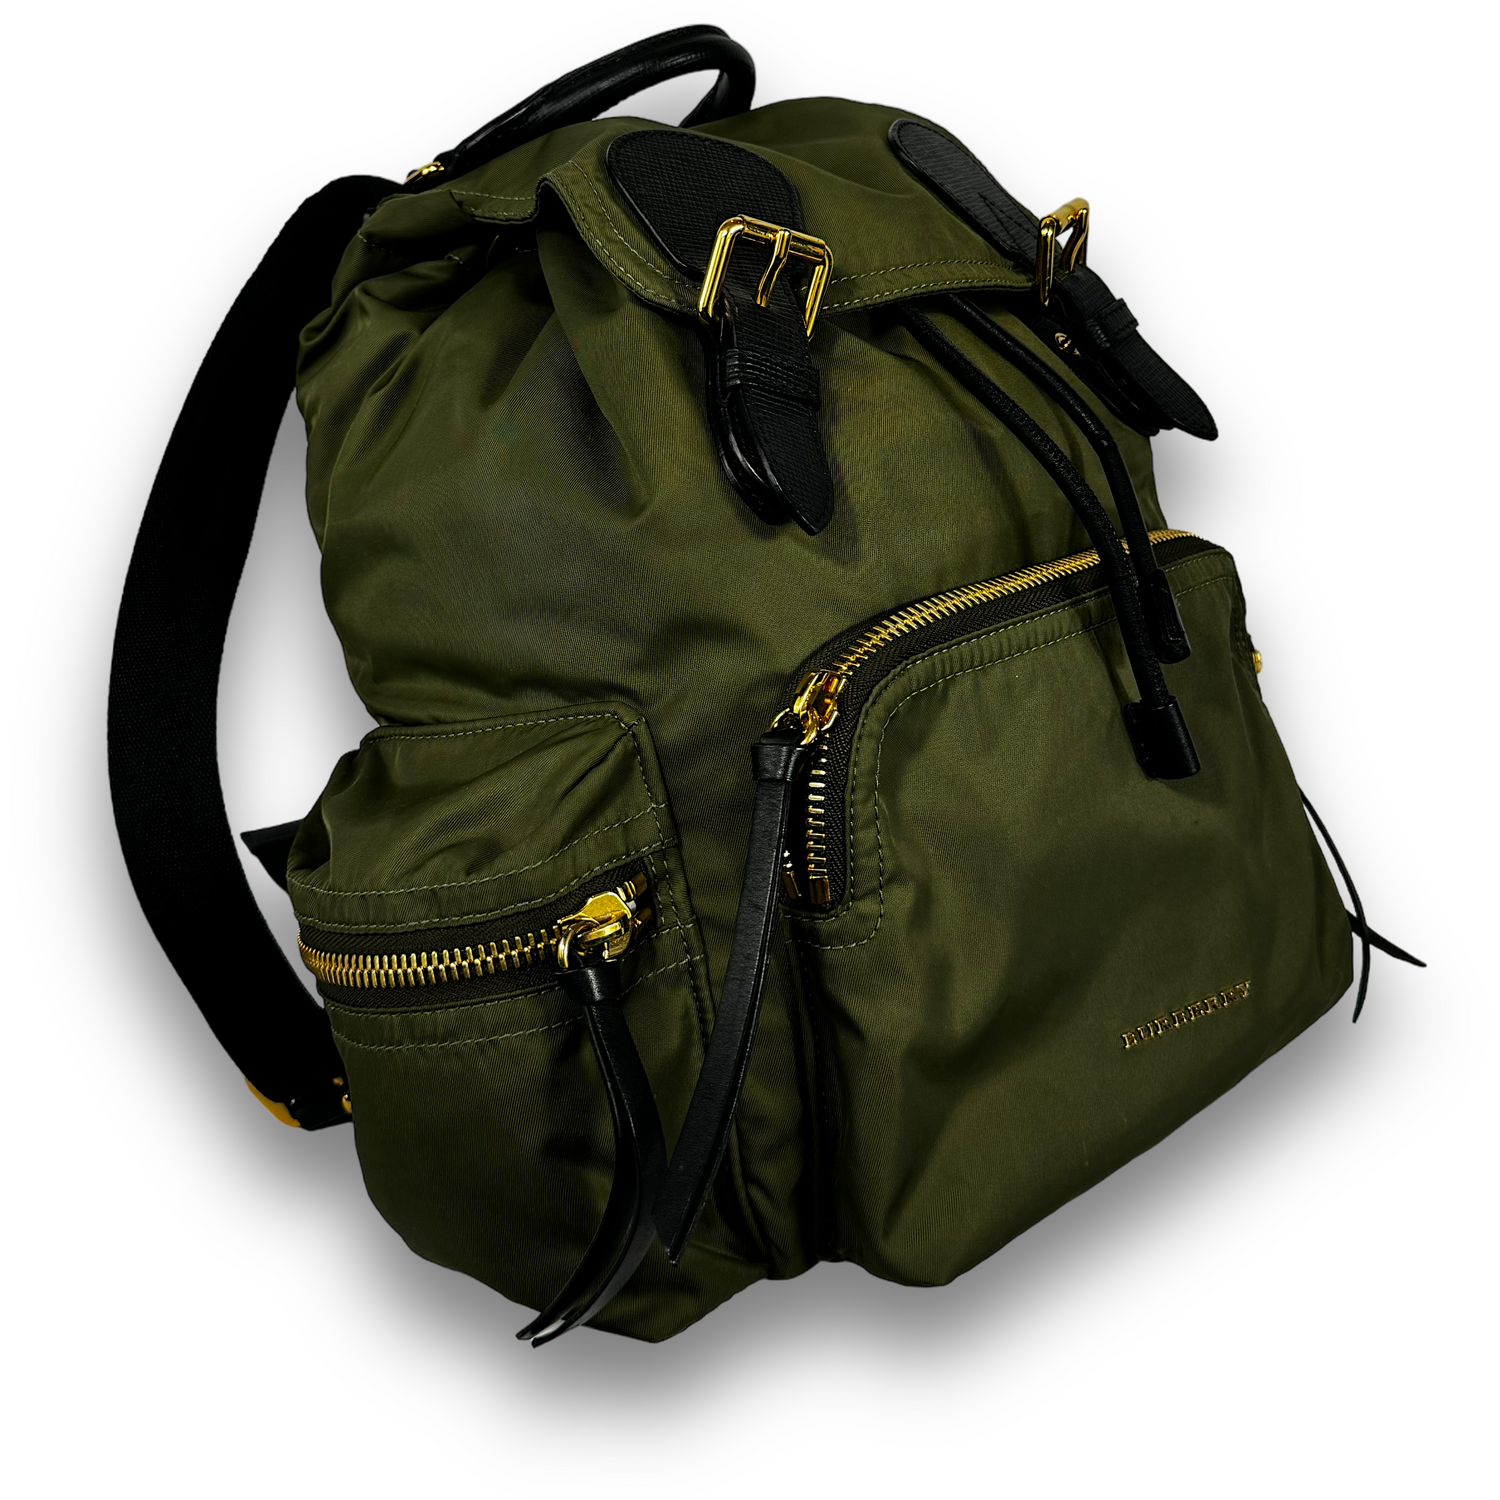 Burberry Runway Technical Backpack